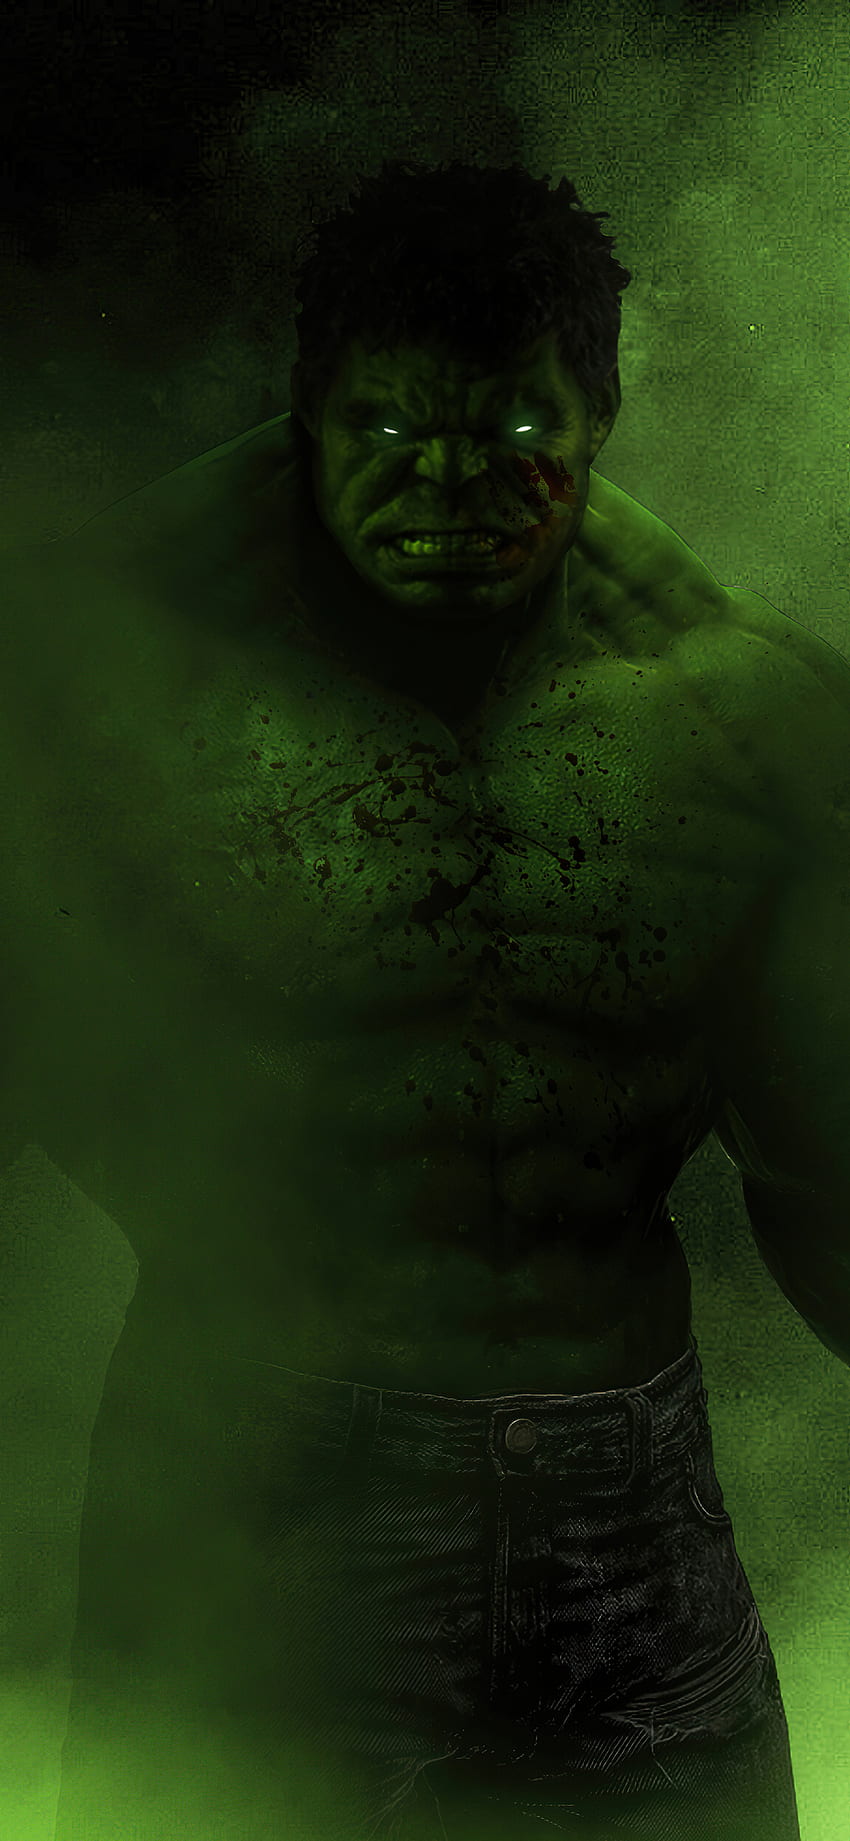 200+] Hulk Wallpapers | Wallpapers.com